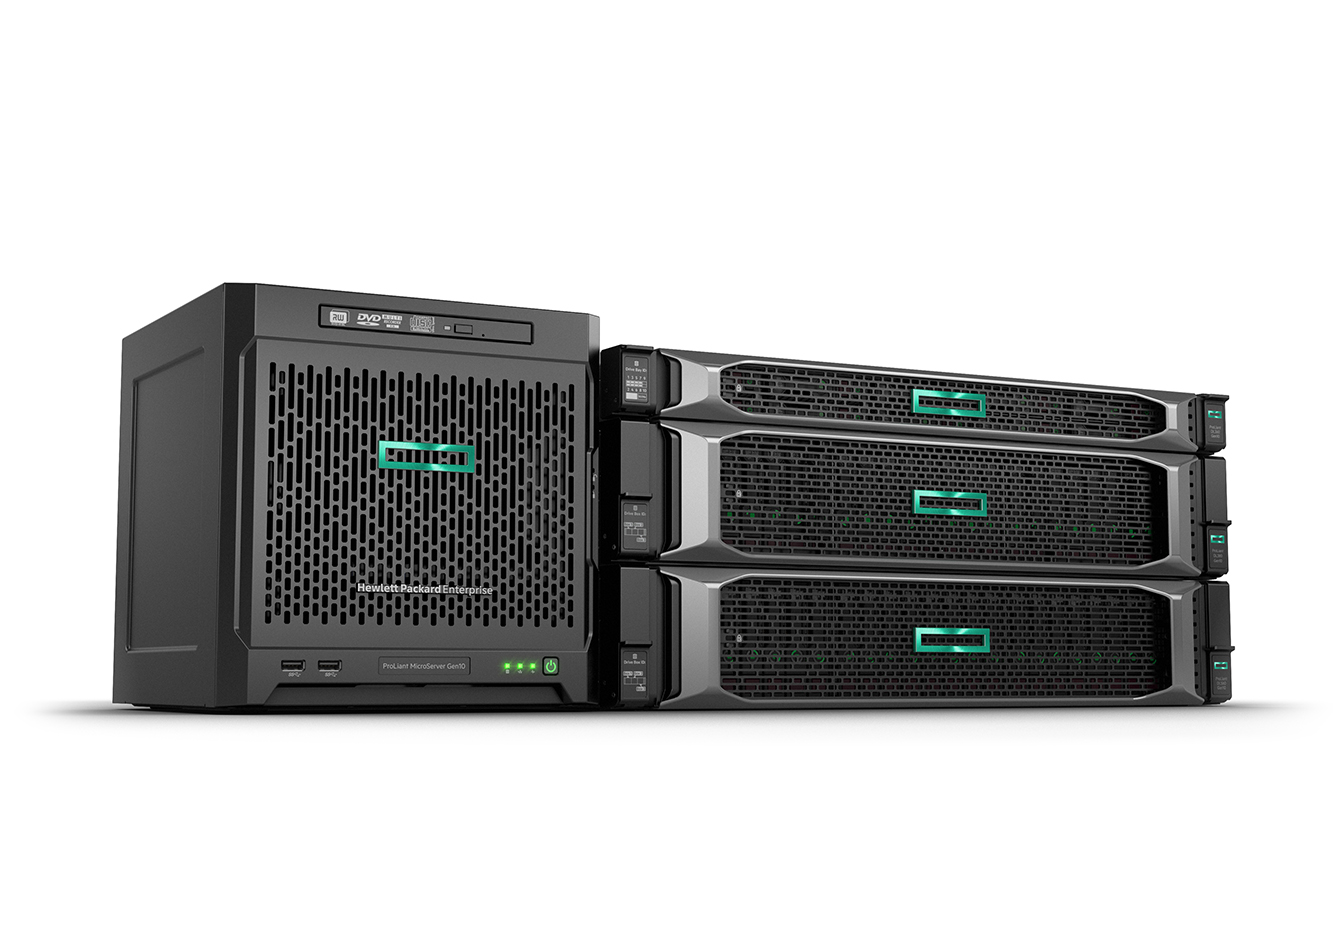 Introducing New HPE ProLiant Gen10 Rack Servers + HPE OEM Windows Server ROK